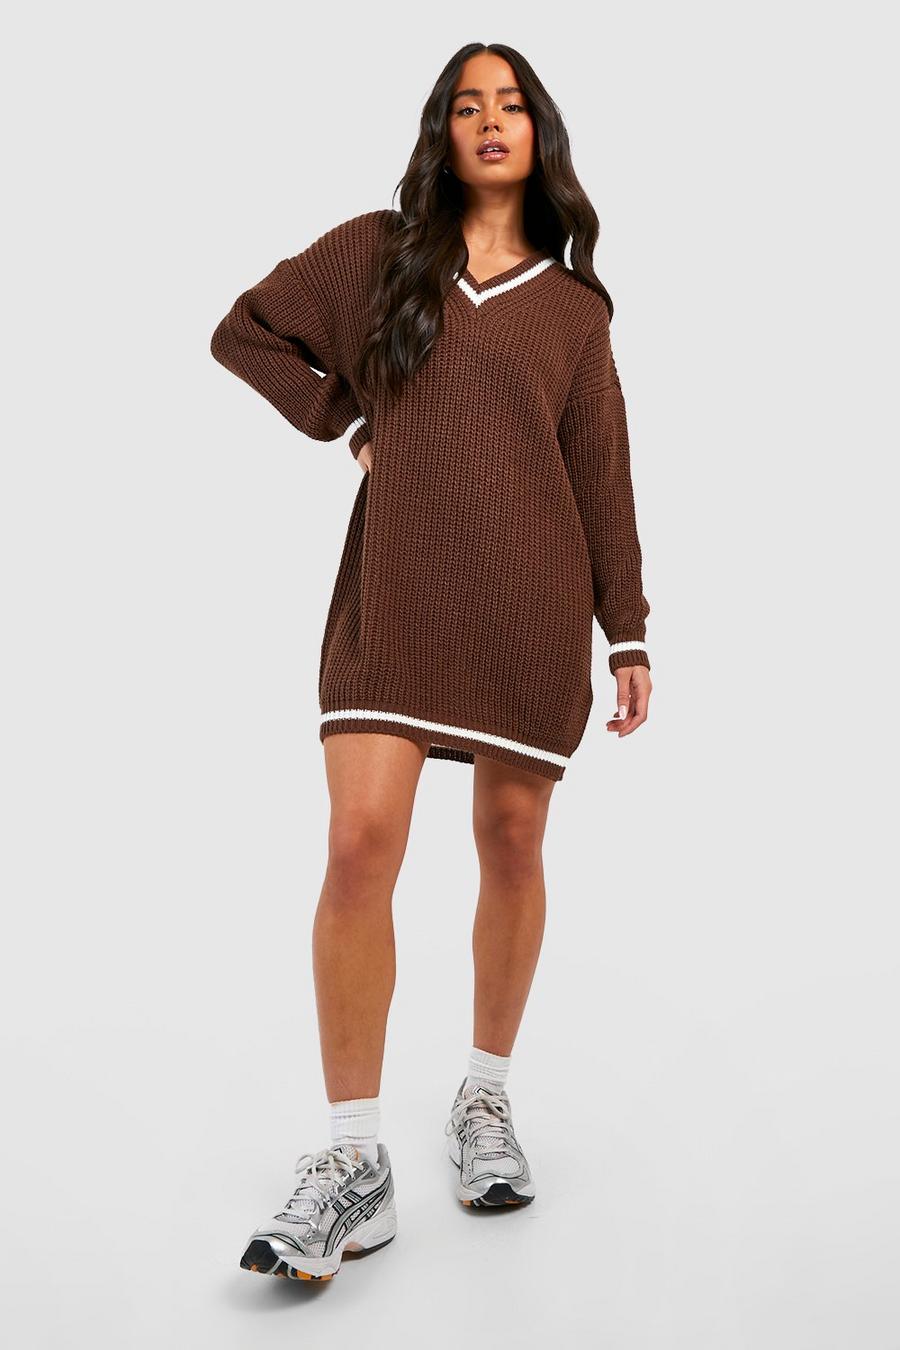 Chocolate brun Petite V Neck Knitted Jumper Dress 